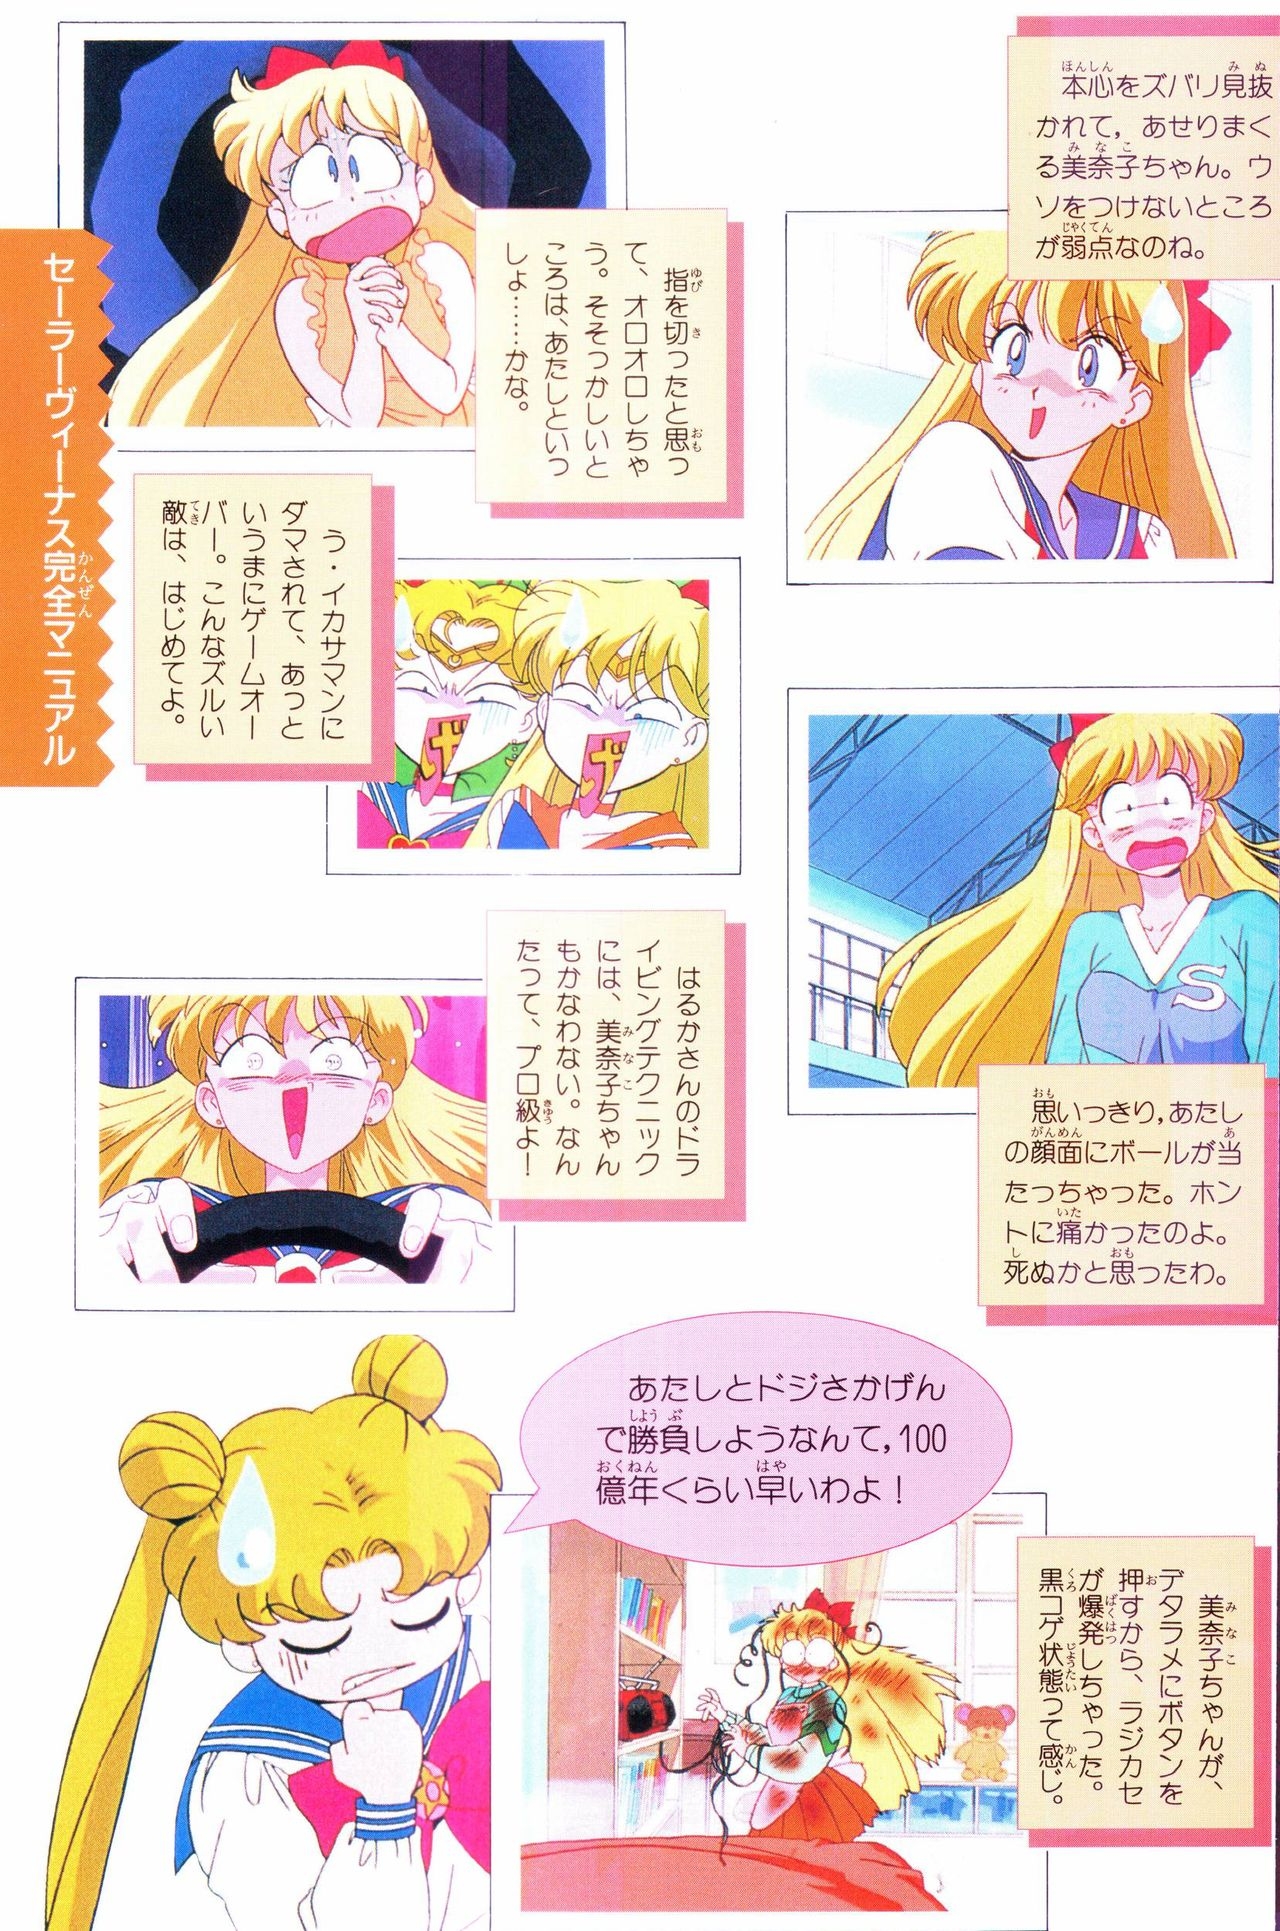 Sailor Moon Official Fan Book - Sailor Venus 65